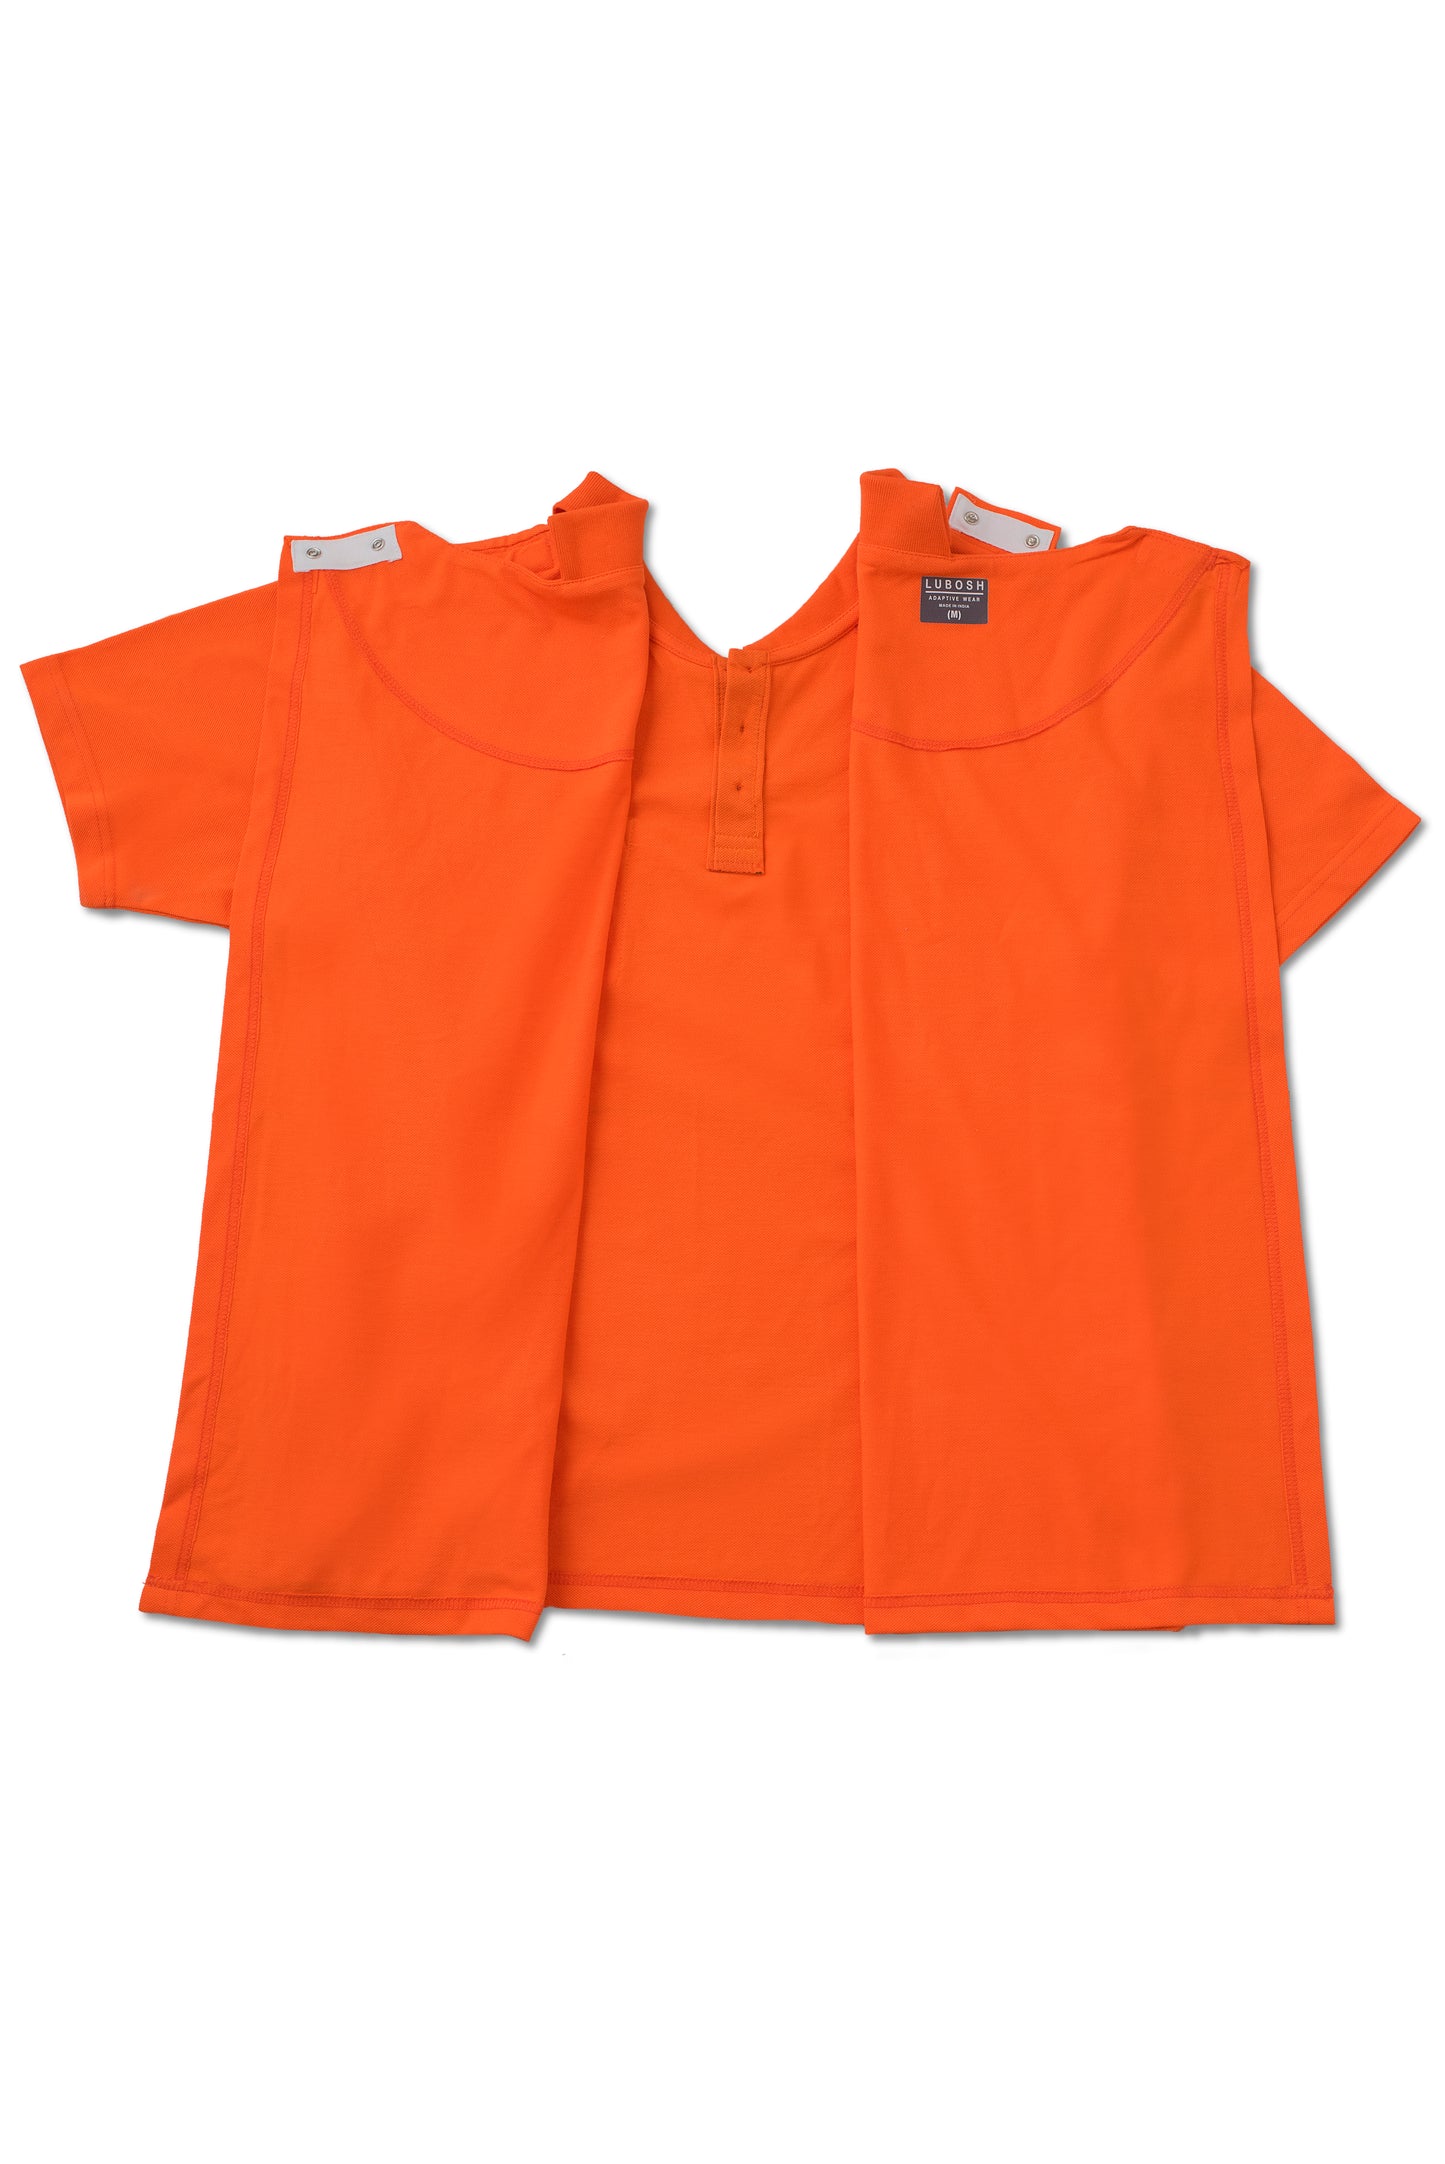 Men's Adaptive Polo Half Sleeves Orange T-Shirt